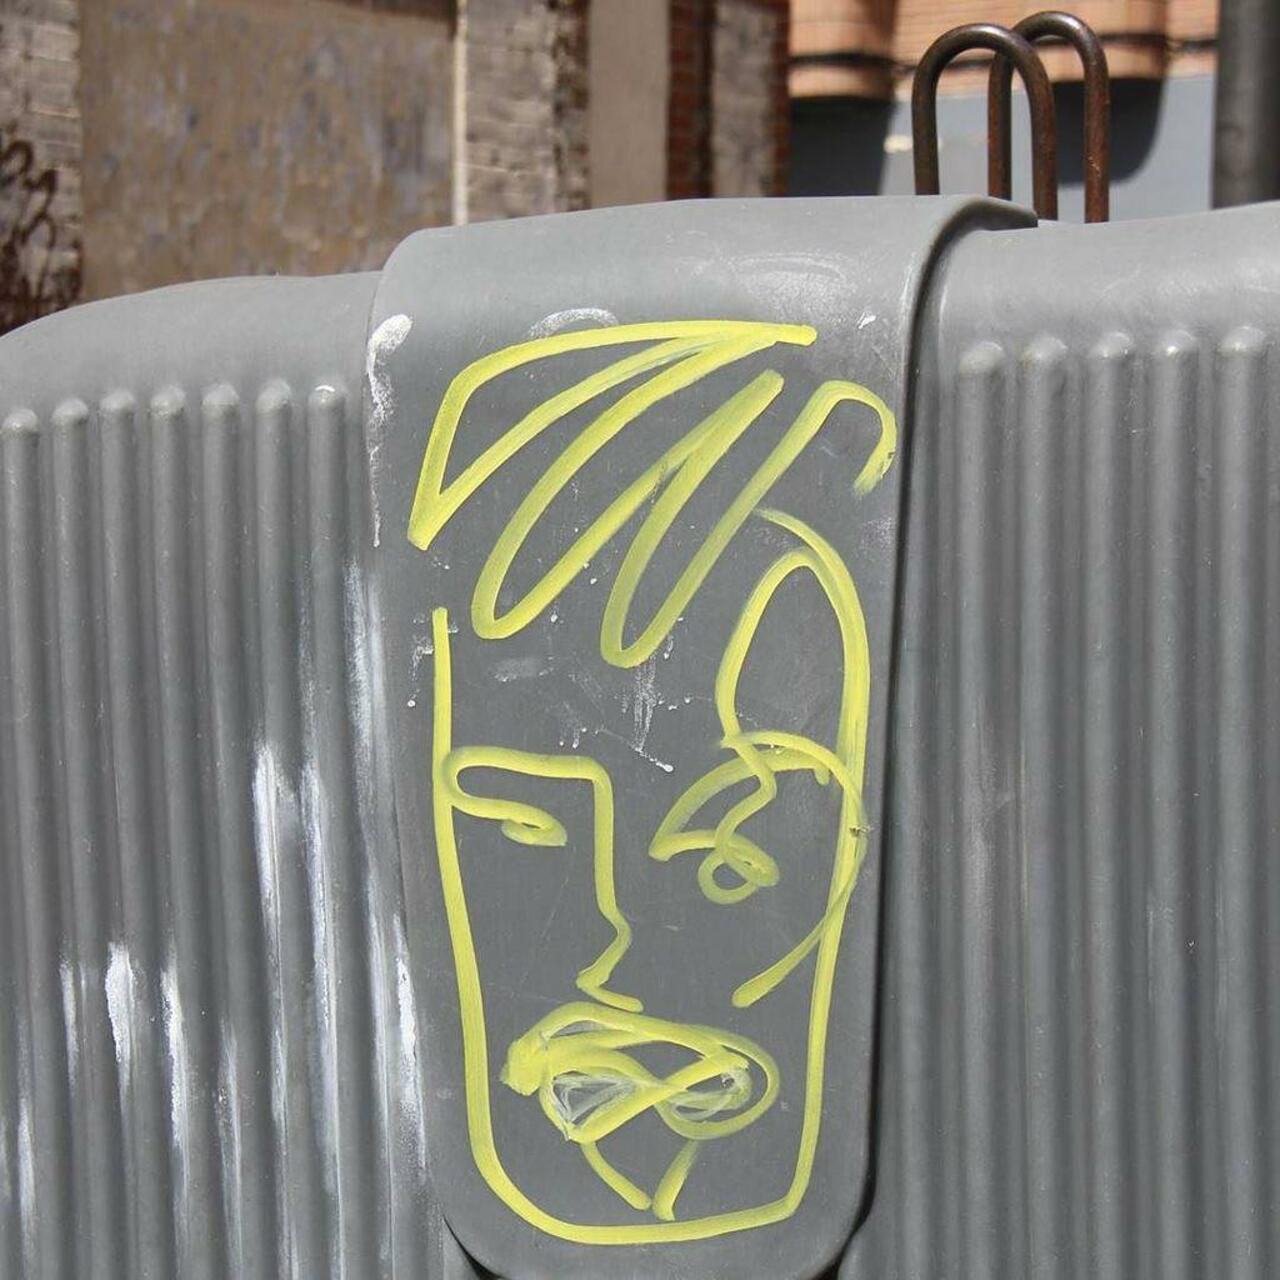 RT @StArtEverywhere: #madrid #madriz #madri #streetart #graffiti #grafite #arteurbano #lavapies #lavapiés  #artederua #artderue #artecal… http://t.co/ARjSY7xPms